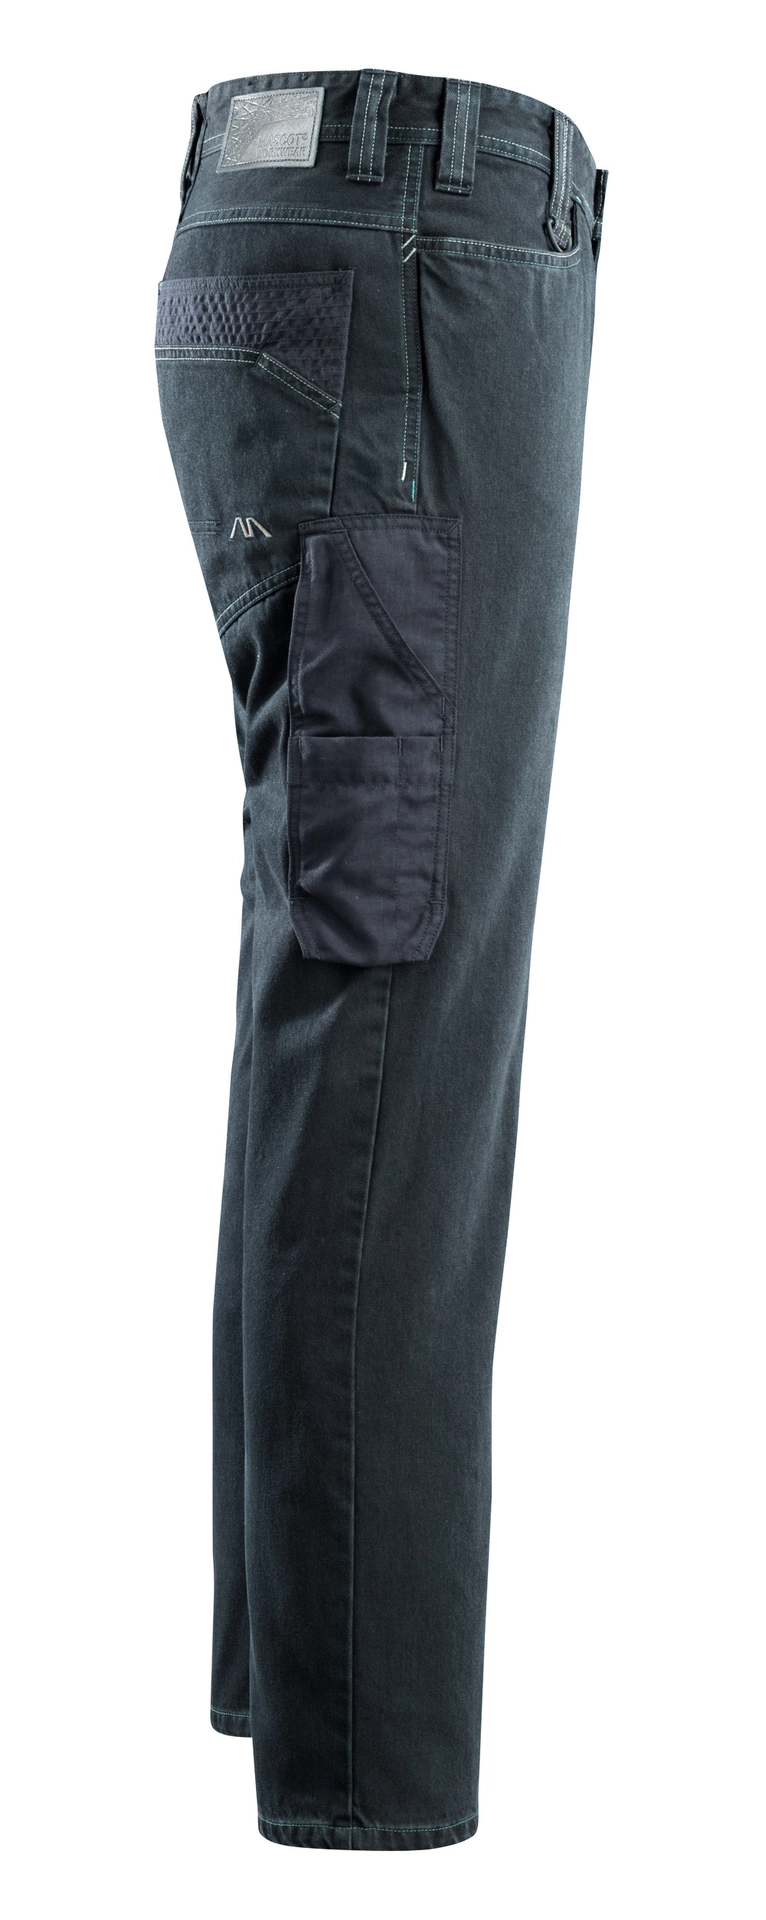 MASCOT® Navia Jeans Größe W29L34, dunkelblauer denim